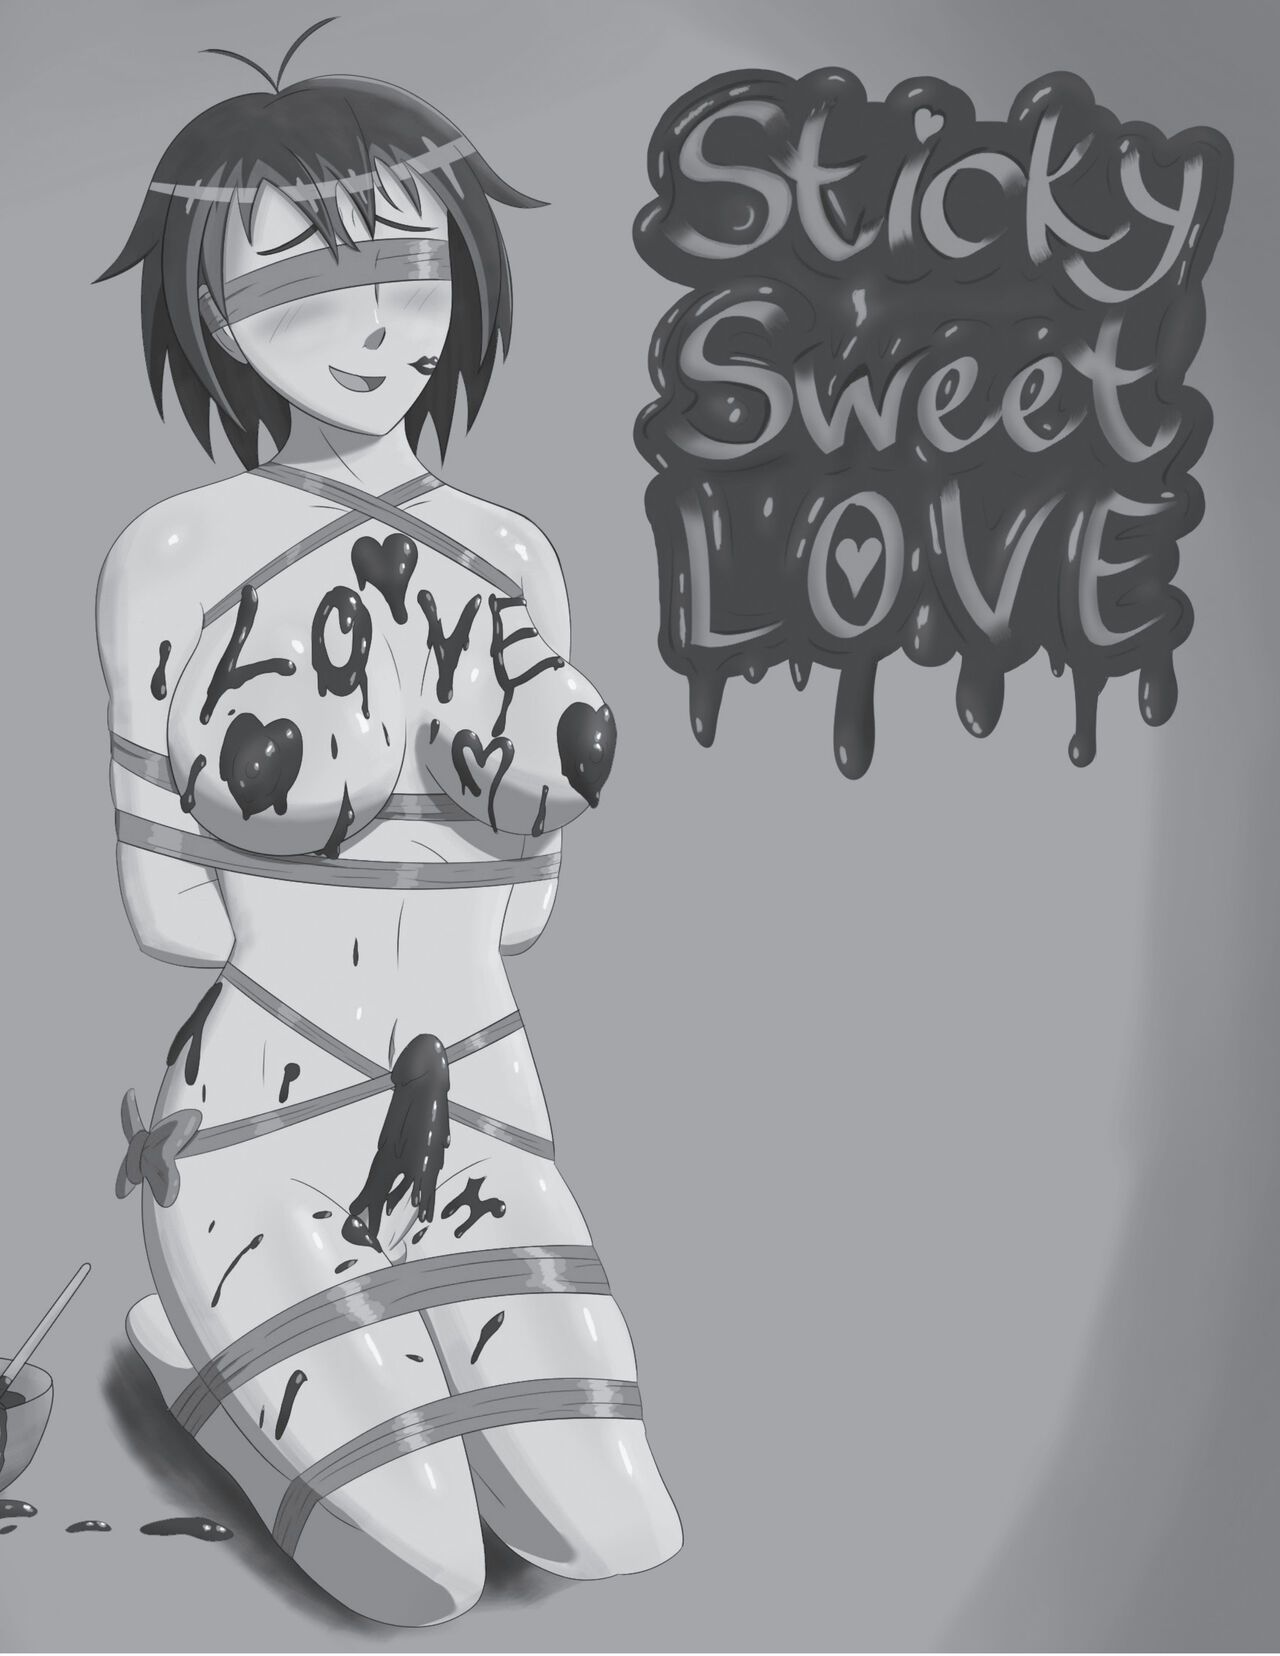 Sticky Sweet Love 3